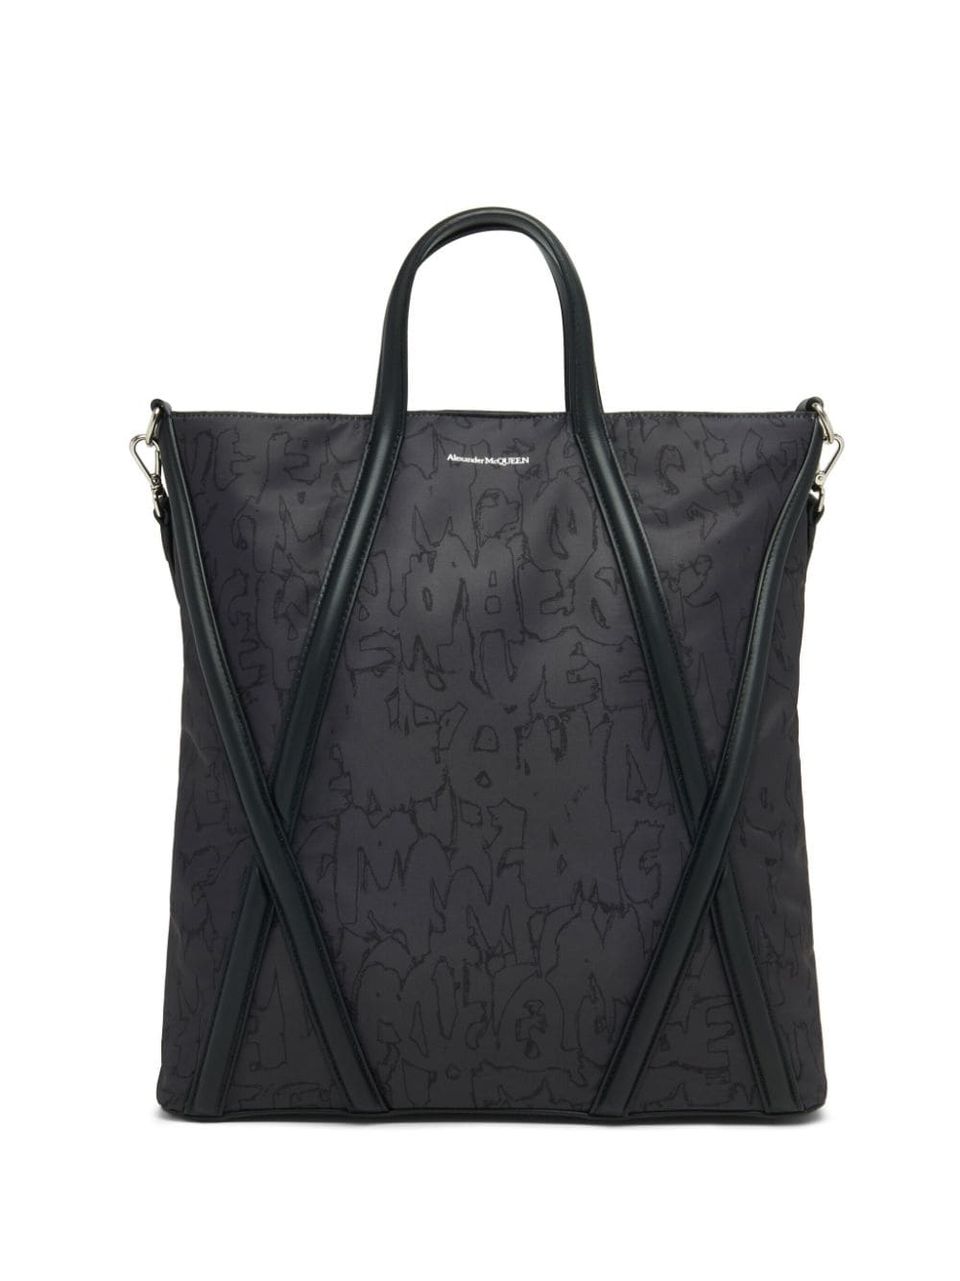 'The Harness Shopper' bag